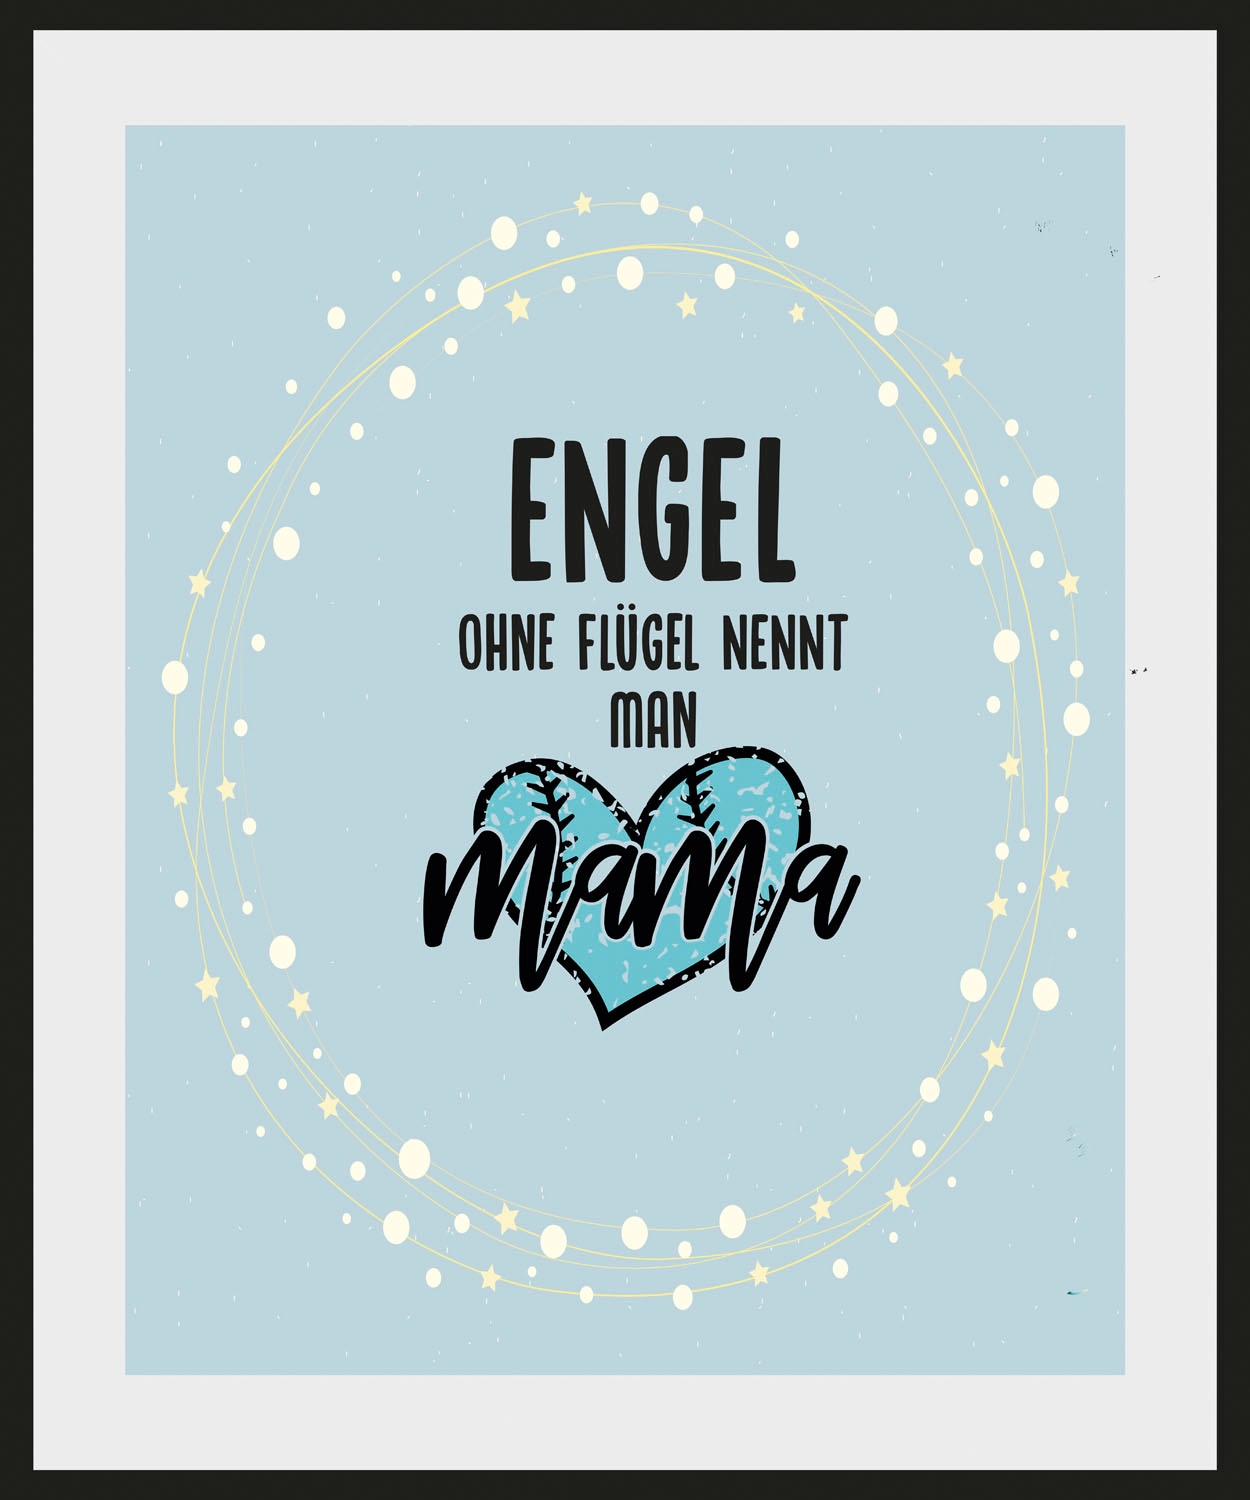 »ENGEL MAN OHNE St.) OTTO Bild bei MAMA«, Schriftzug, FLÜGEL queence (1 NENNT